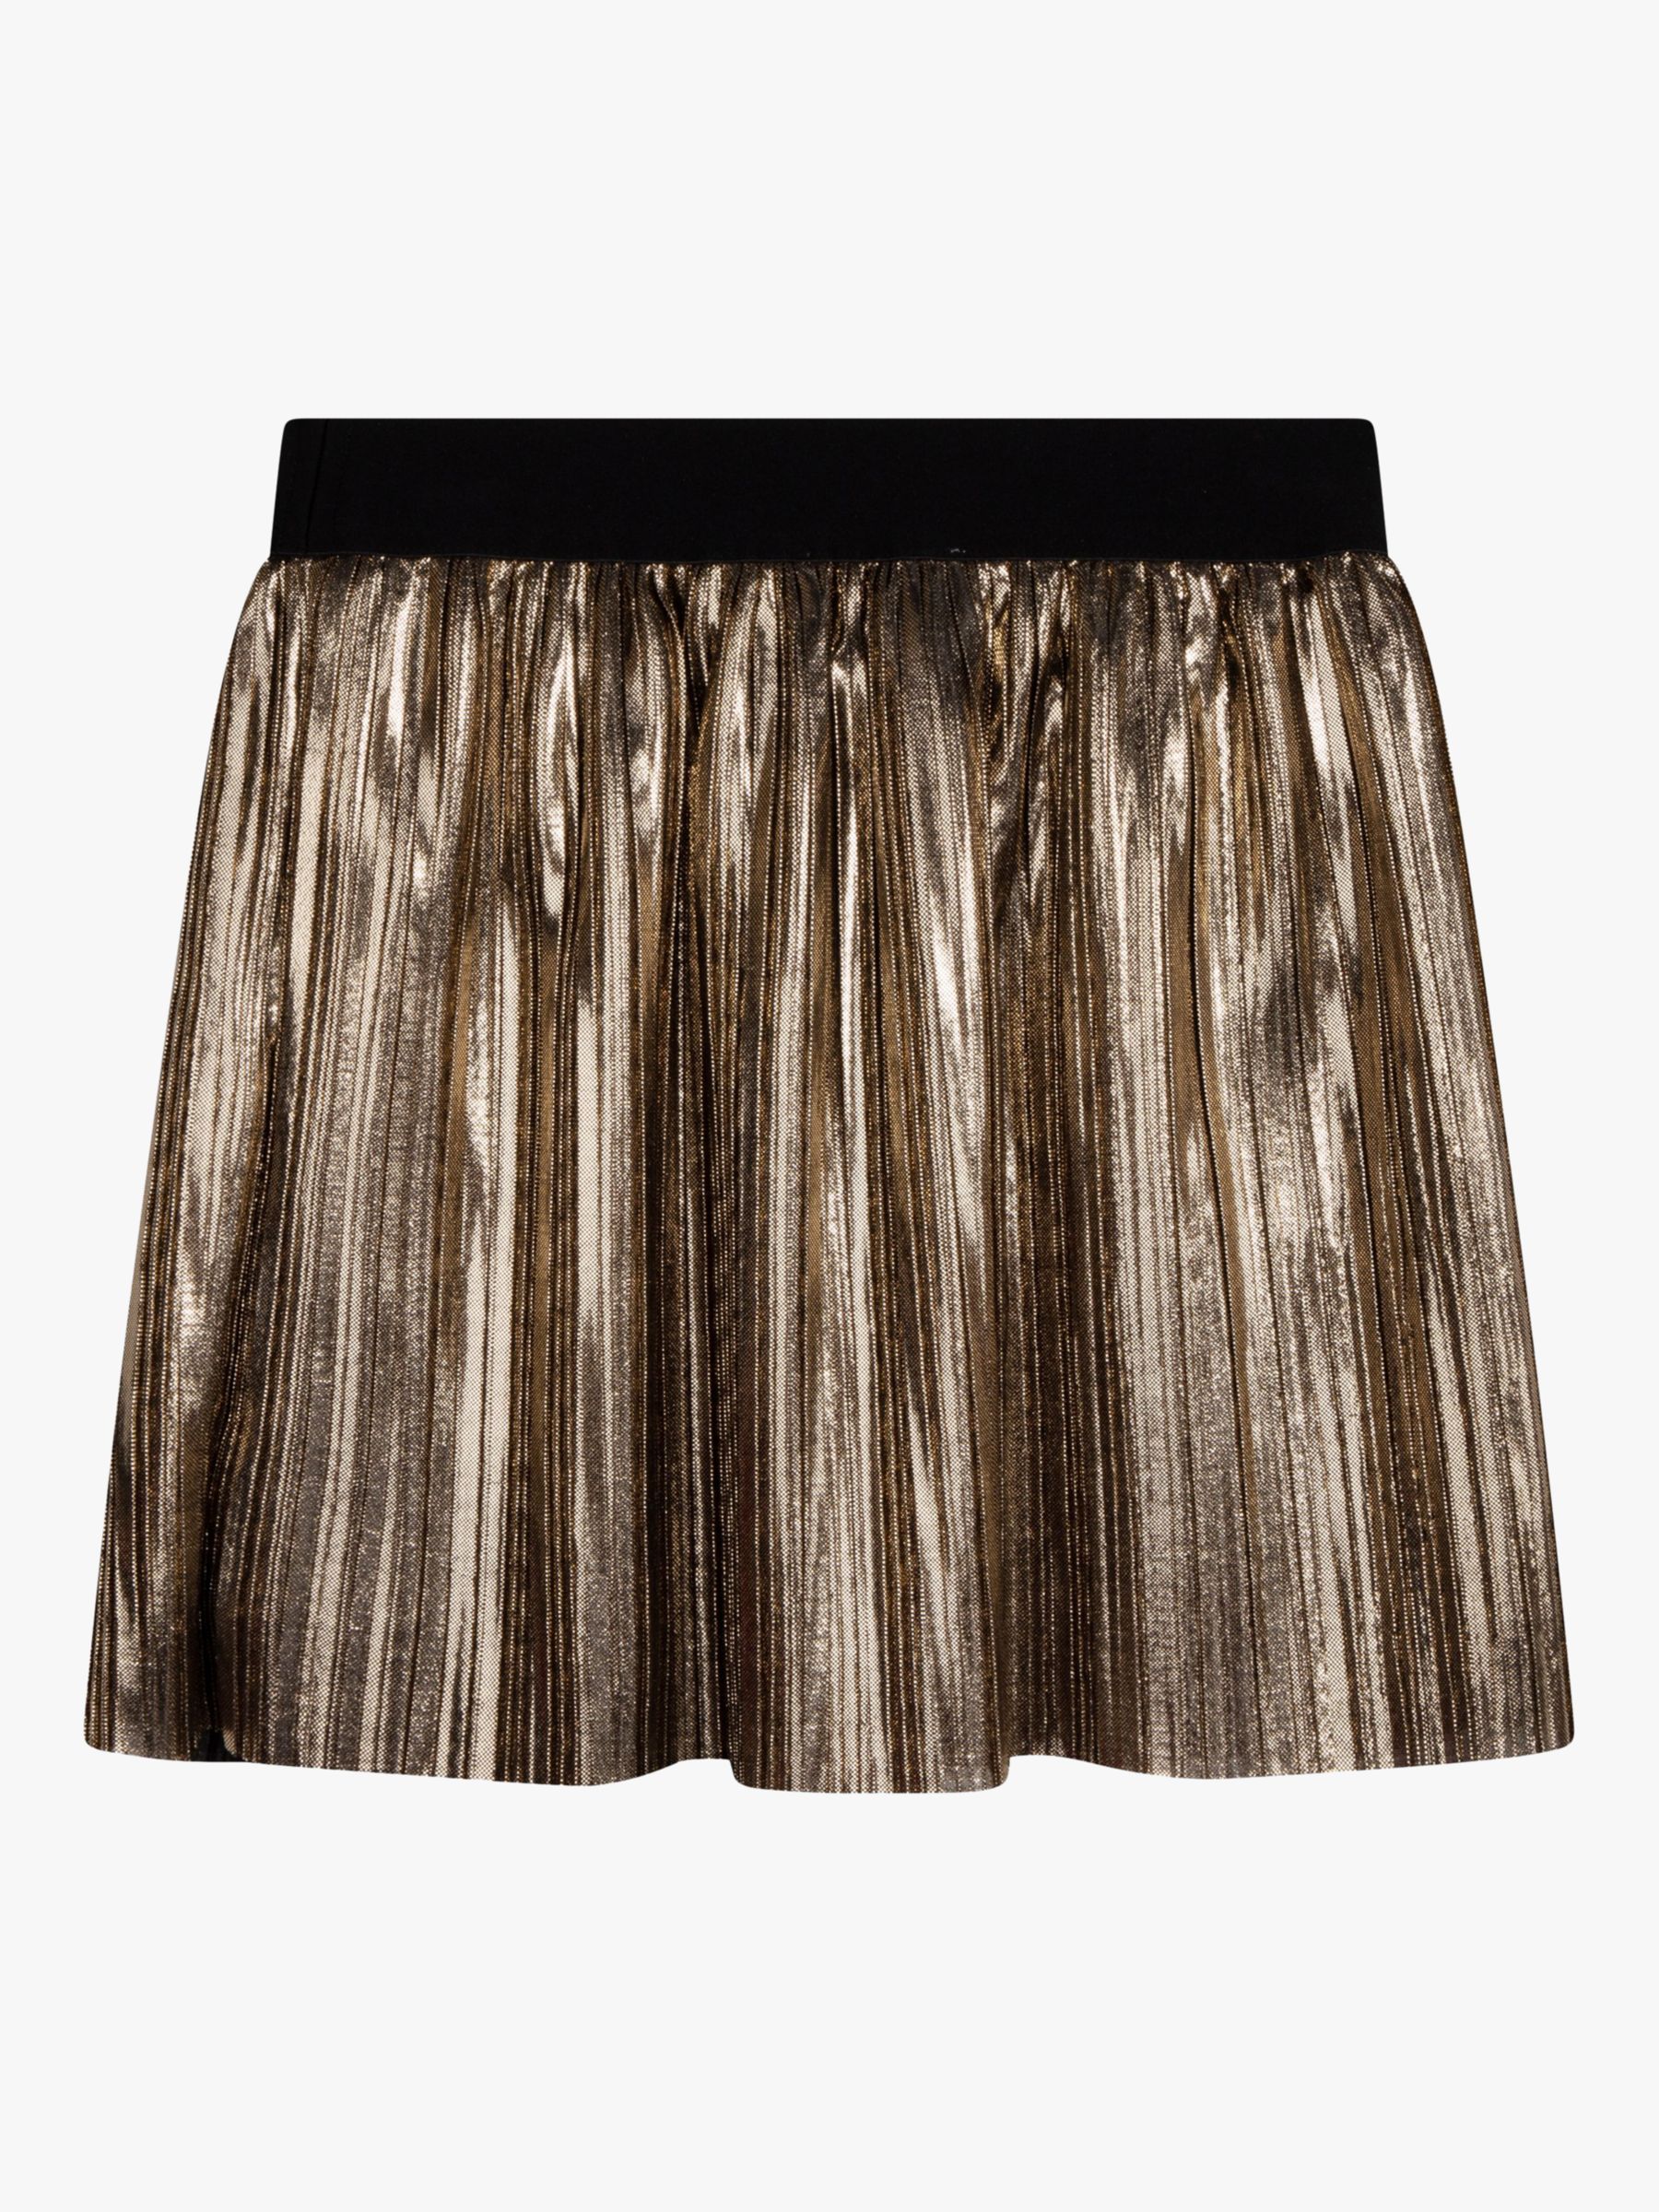 Michael Kors Kids' Metallic Pleated Mini Skirt, Gold, 4 years